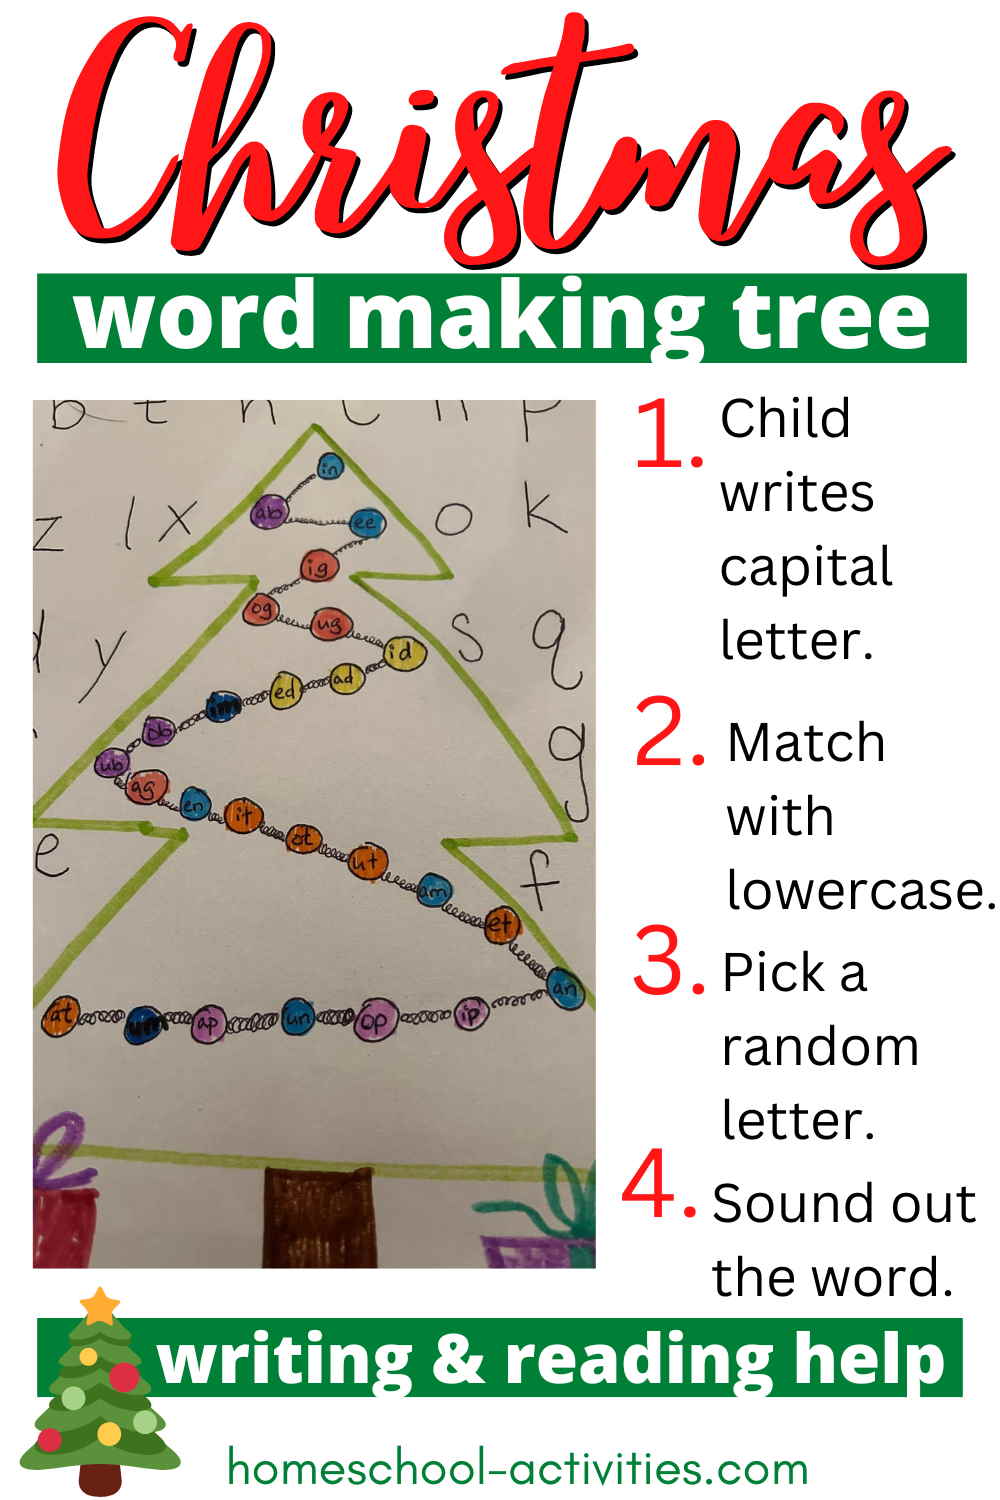 Writing and reading activity tree